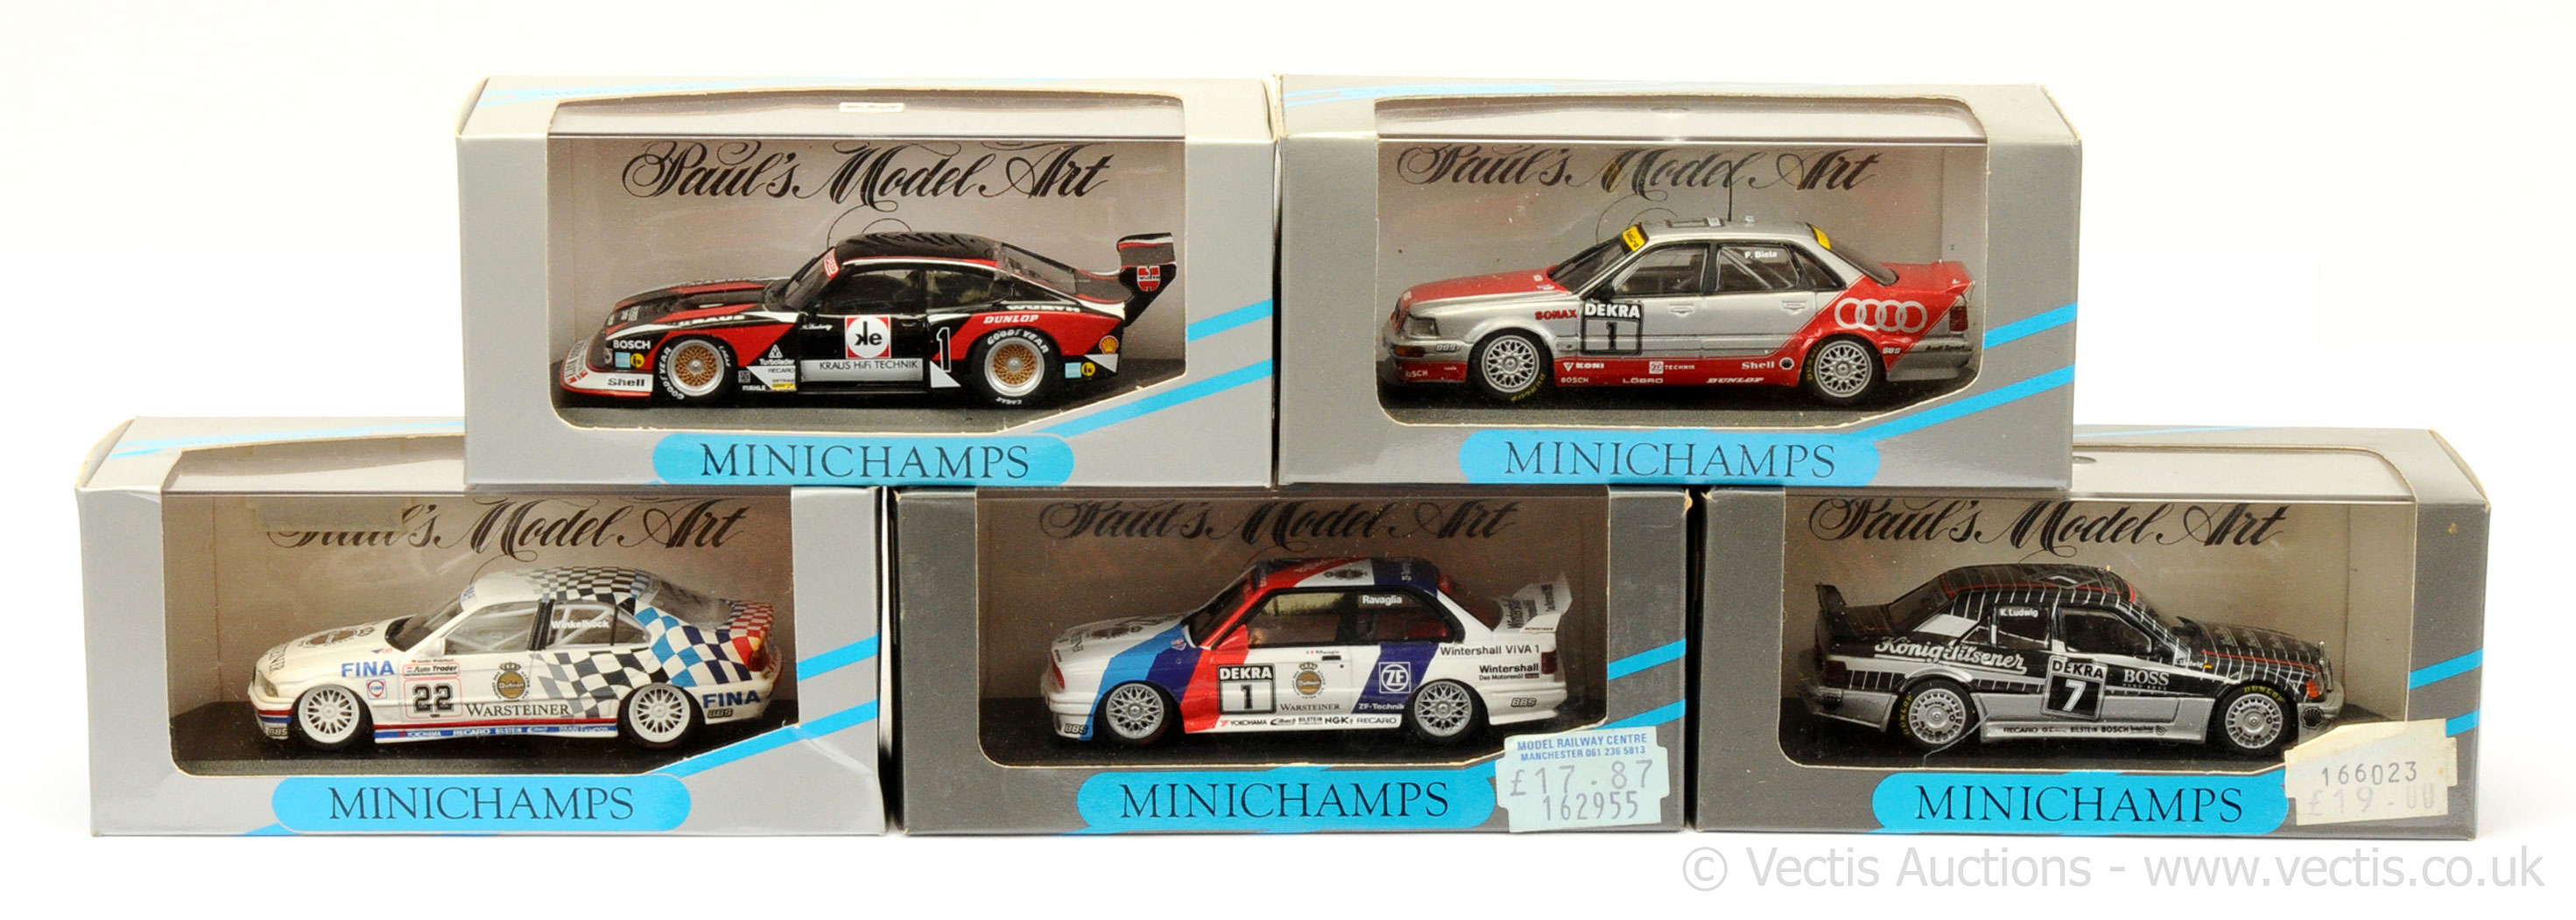 GRP inc Minichamps (1/43rd scale) Racing Cars